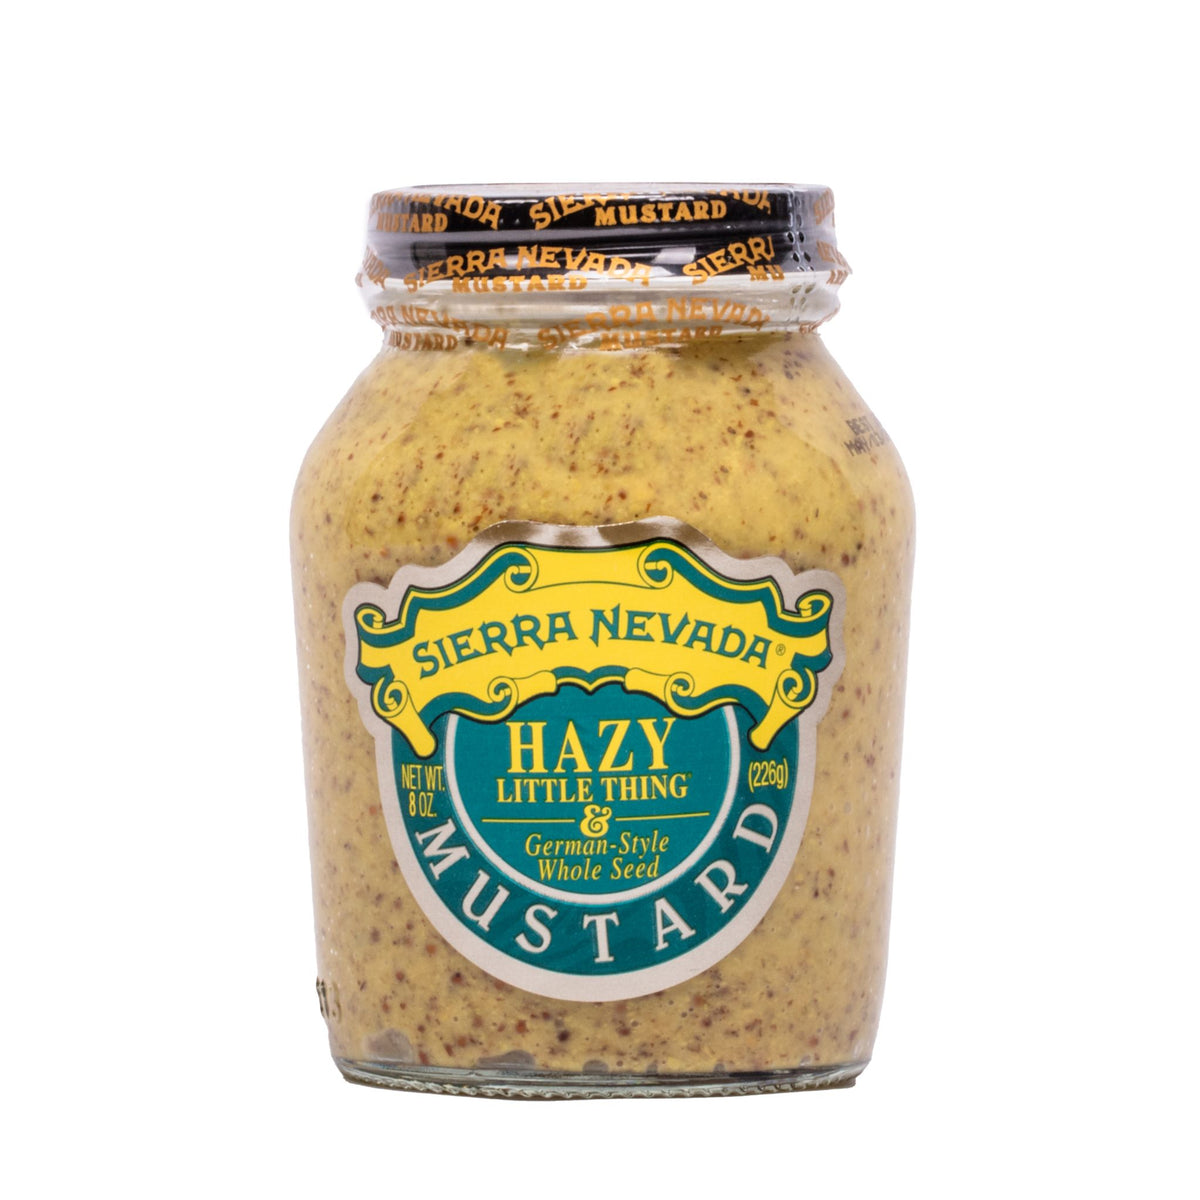 Sierra Nevada Hazy Little Thing mustard jar